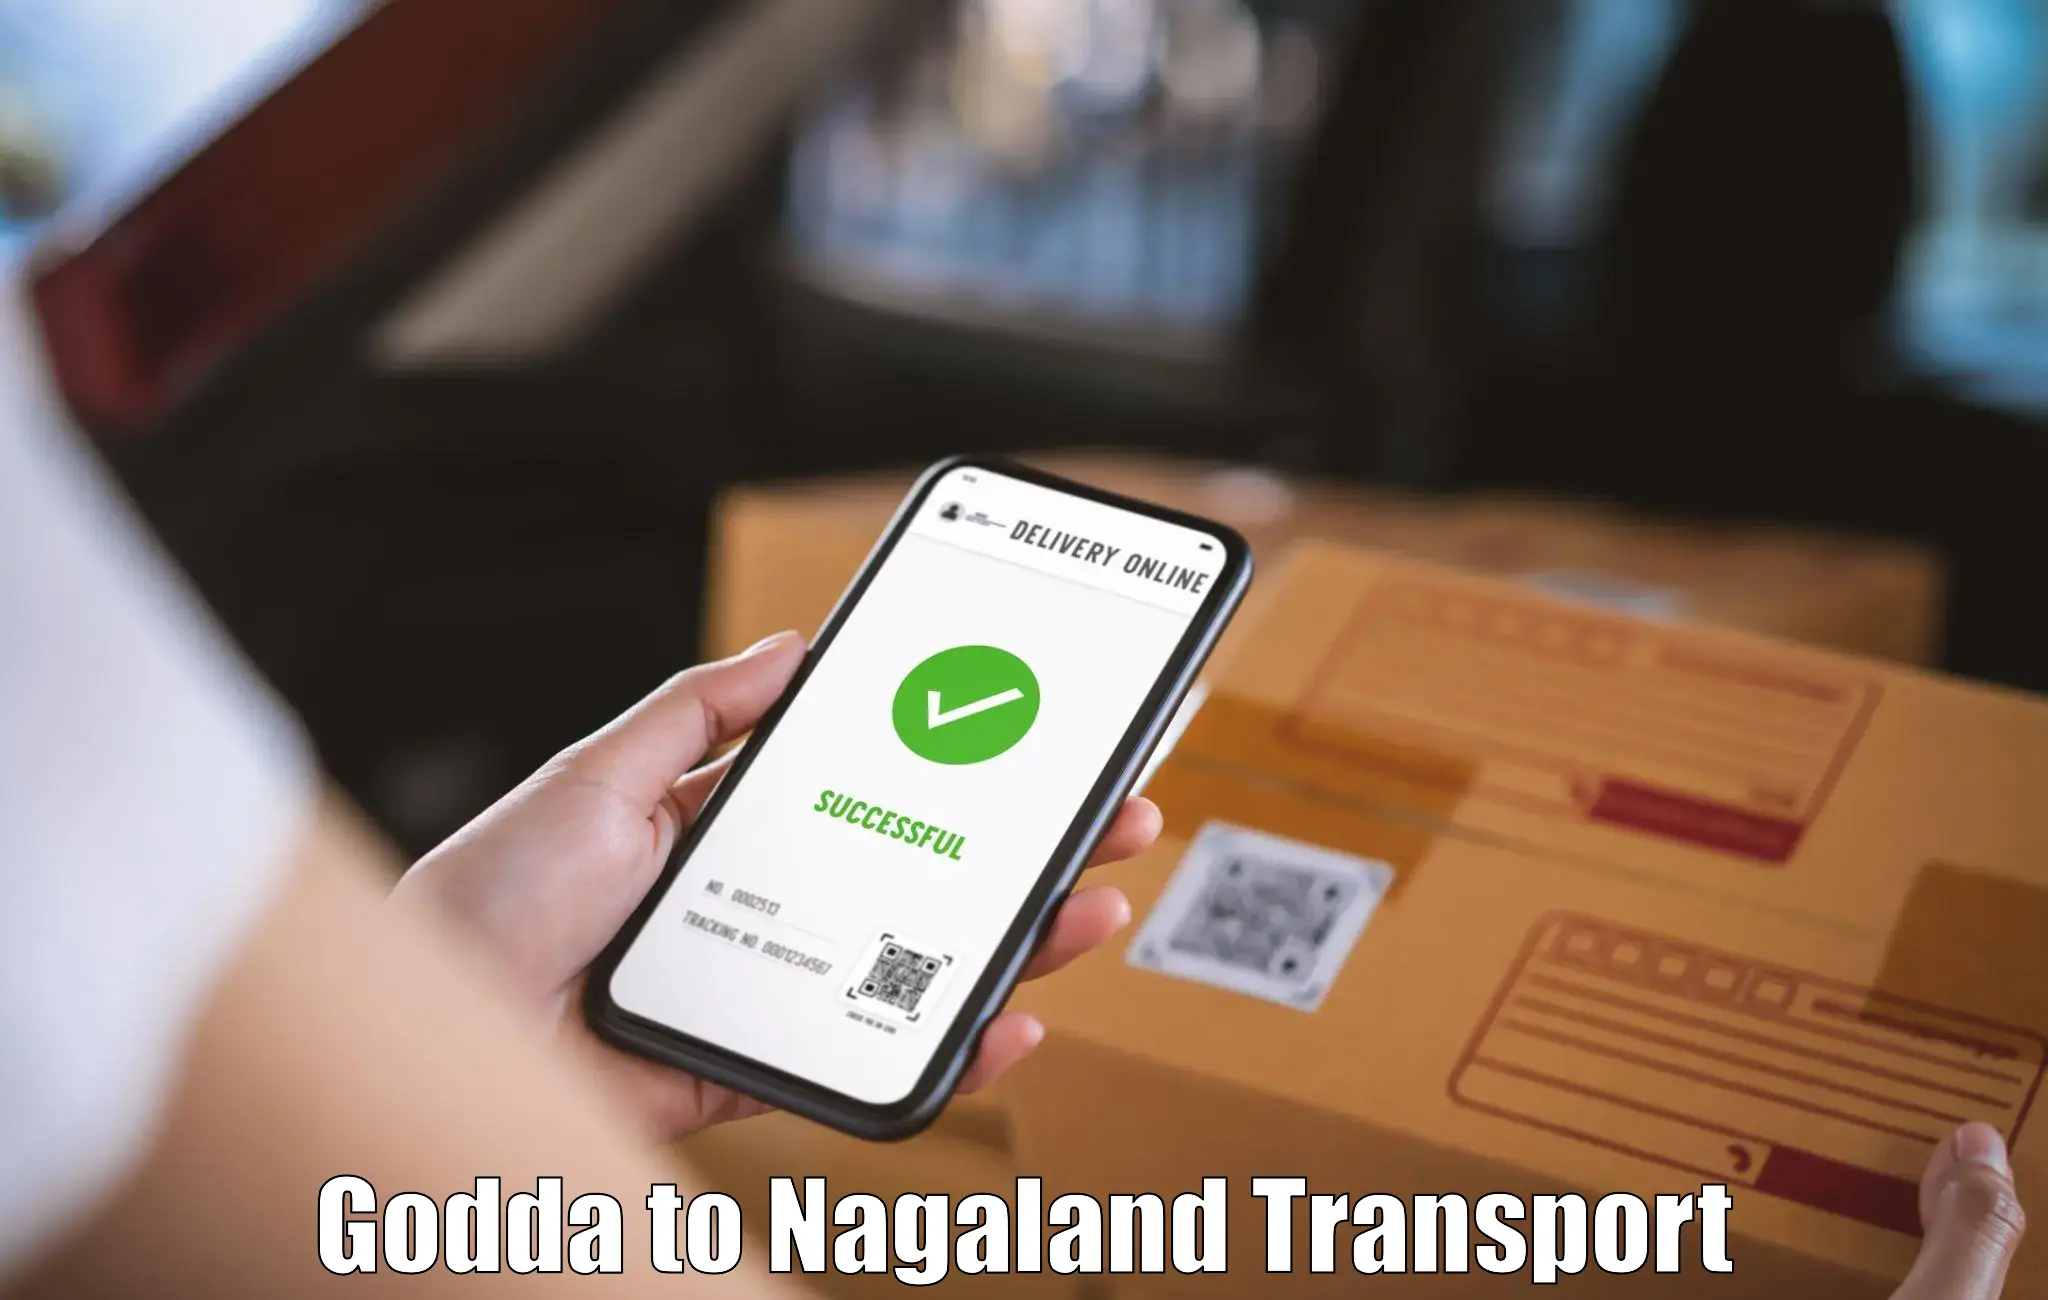 Nearby transport service Godda to Mon